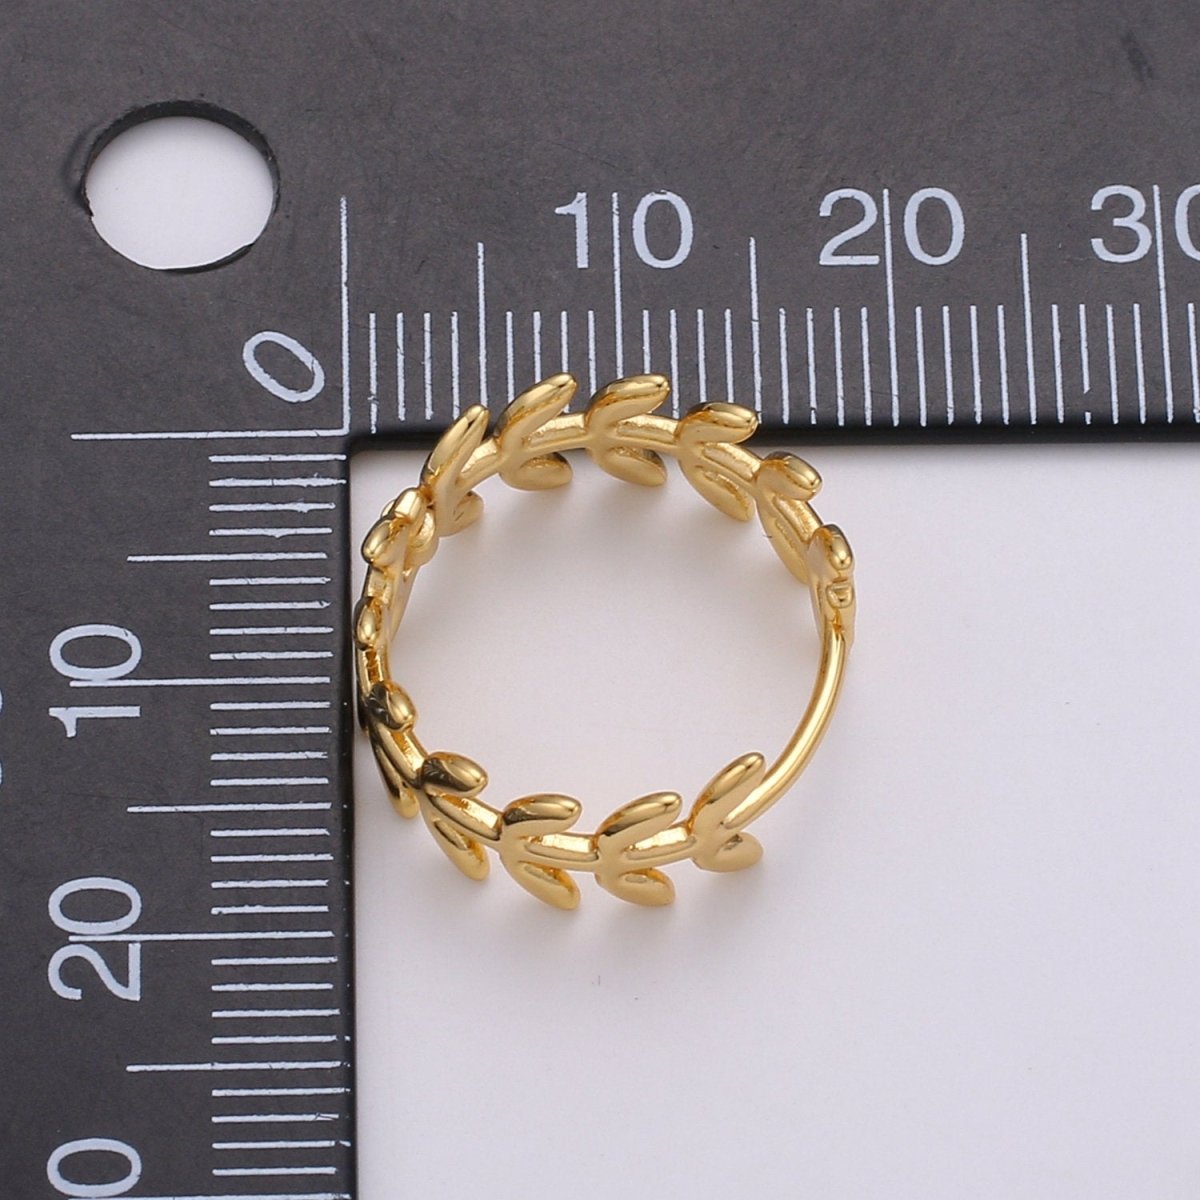 Dainty Gold Leaf Hoop Earrings – 24k Gold Filled Hoop Earring, Inspired by Ancient Greek Laurel Wreaths artistry Jewelry Q-322 - DLUXCA